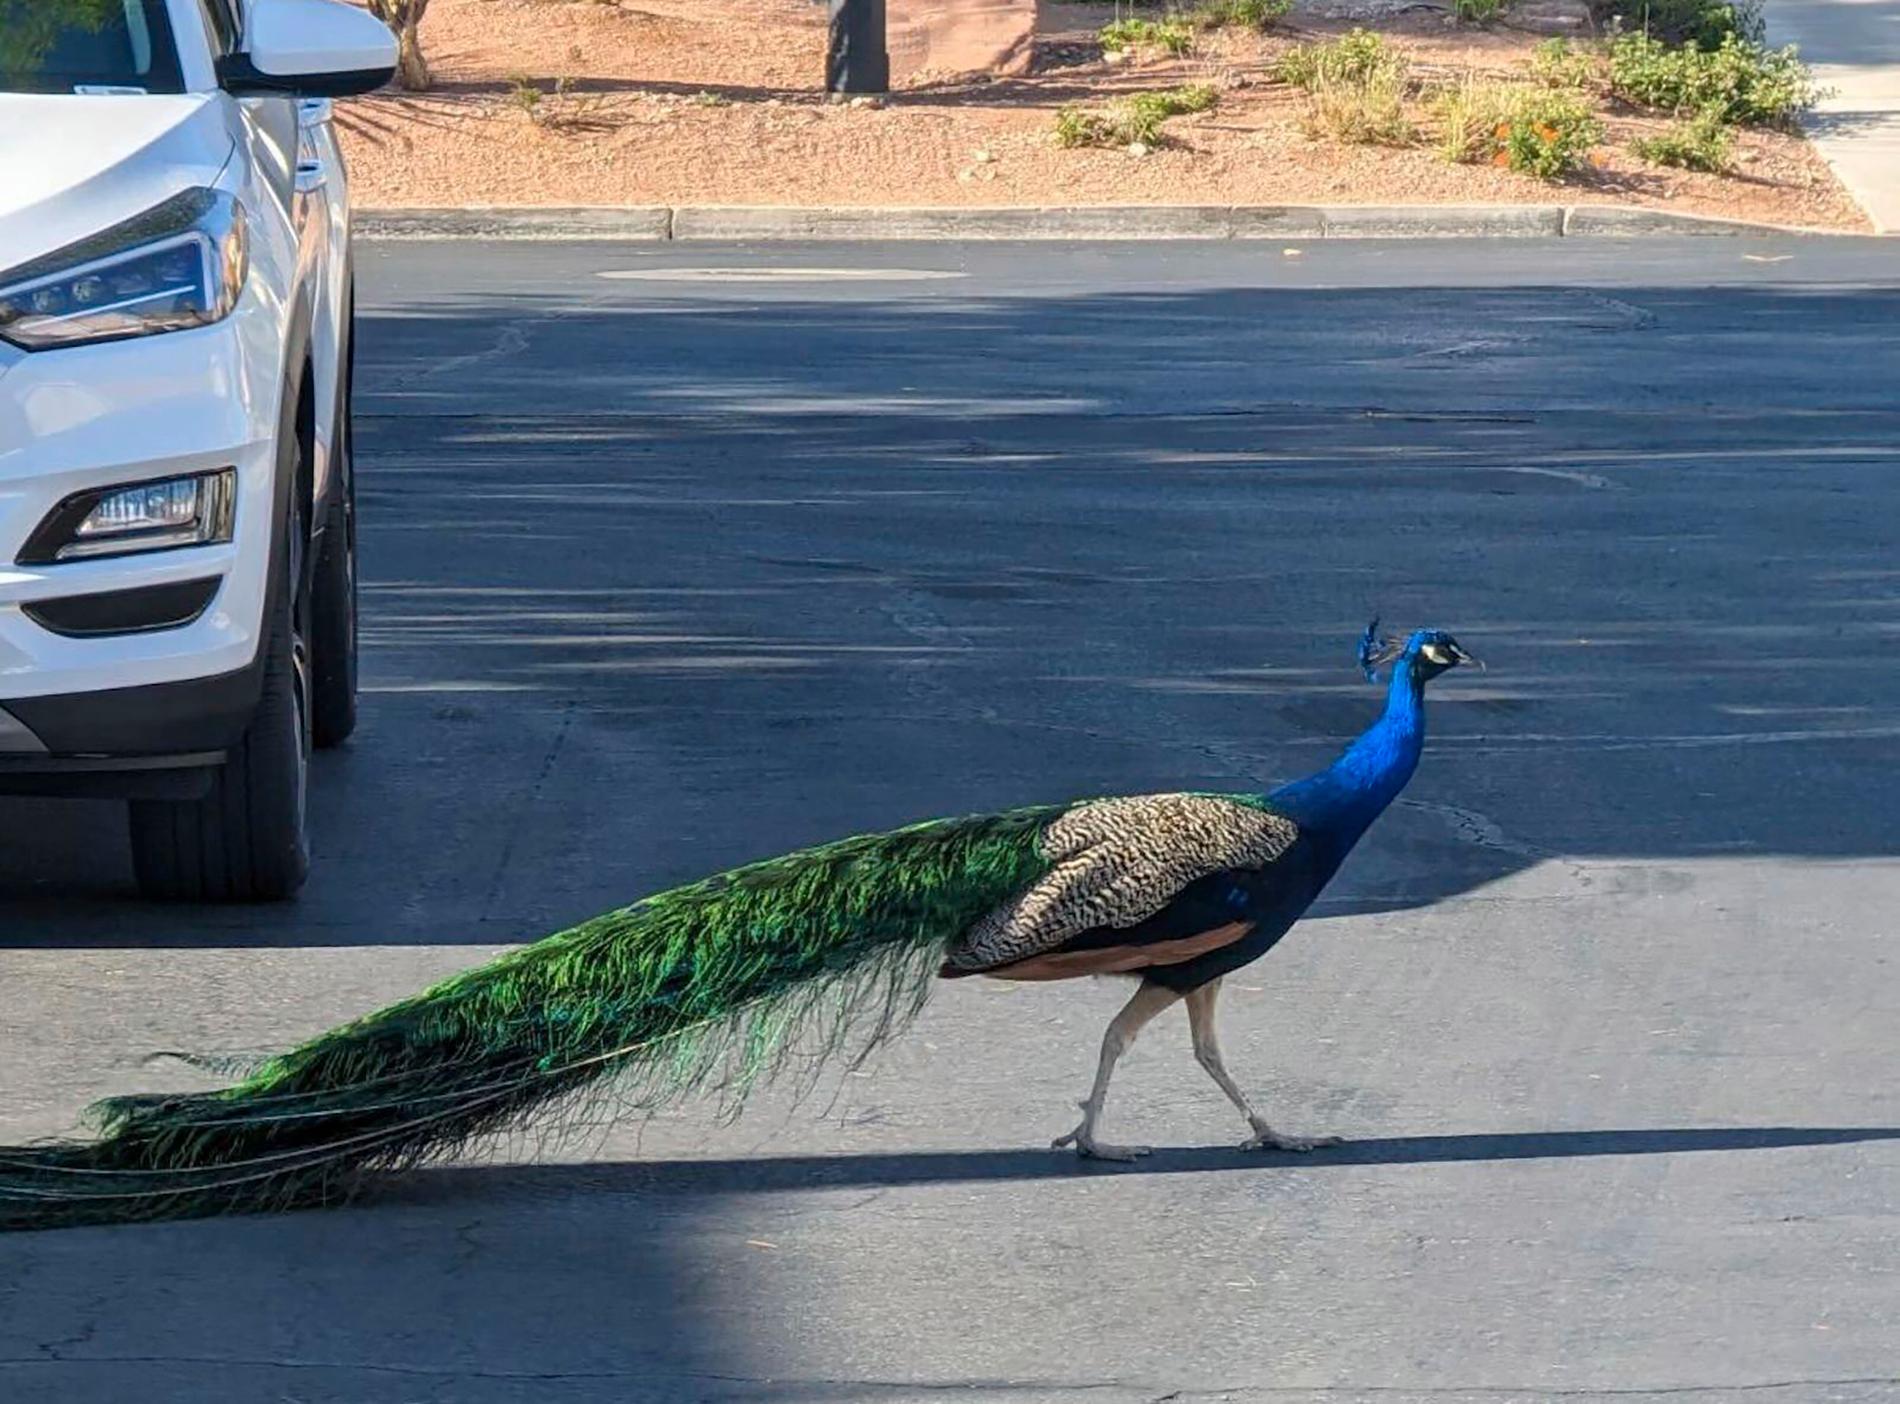 Animal Protection Investigates the Murder of Beloved Peacock in Las Vegas Neighborhood